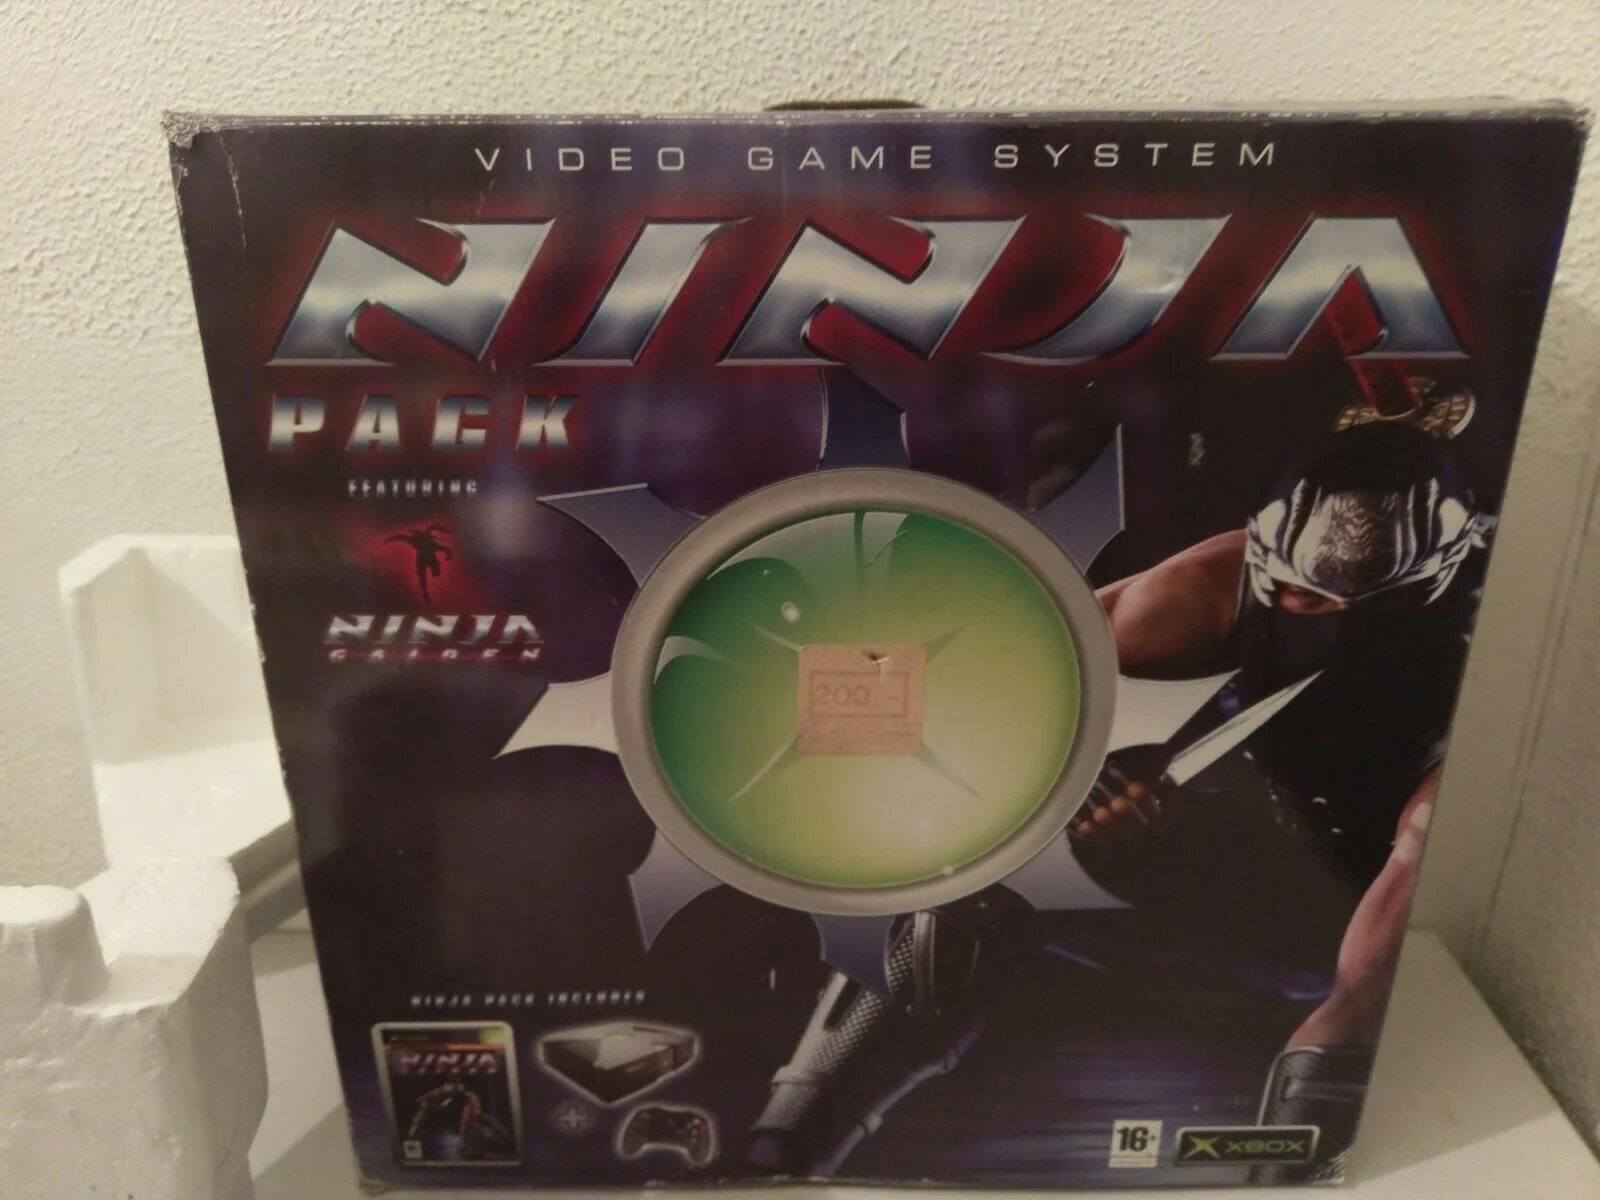  Microsoft Xbox Ninja Gaiden Bundle